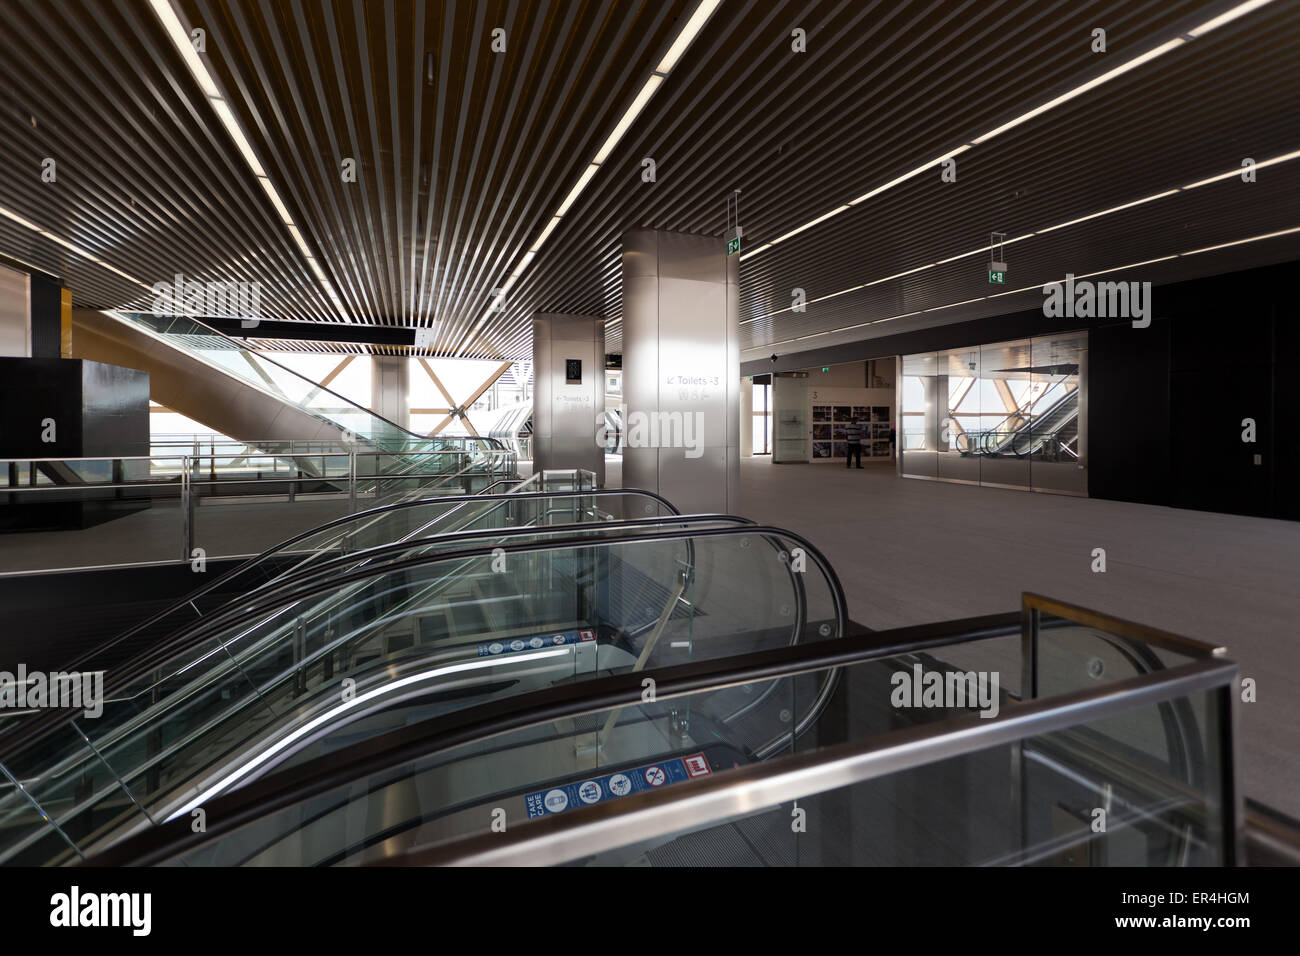 Im Weitwinkel im inneren Teil des Atriums, das neue Cross Bahnhof am Isle of Dogs, Canary Wharf in London. Stockfoto